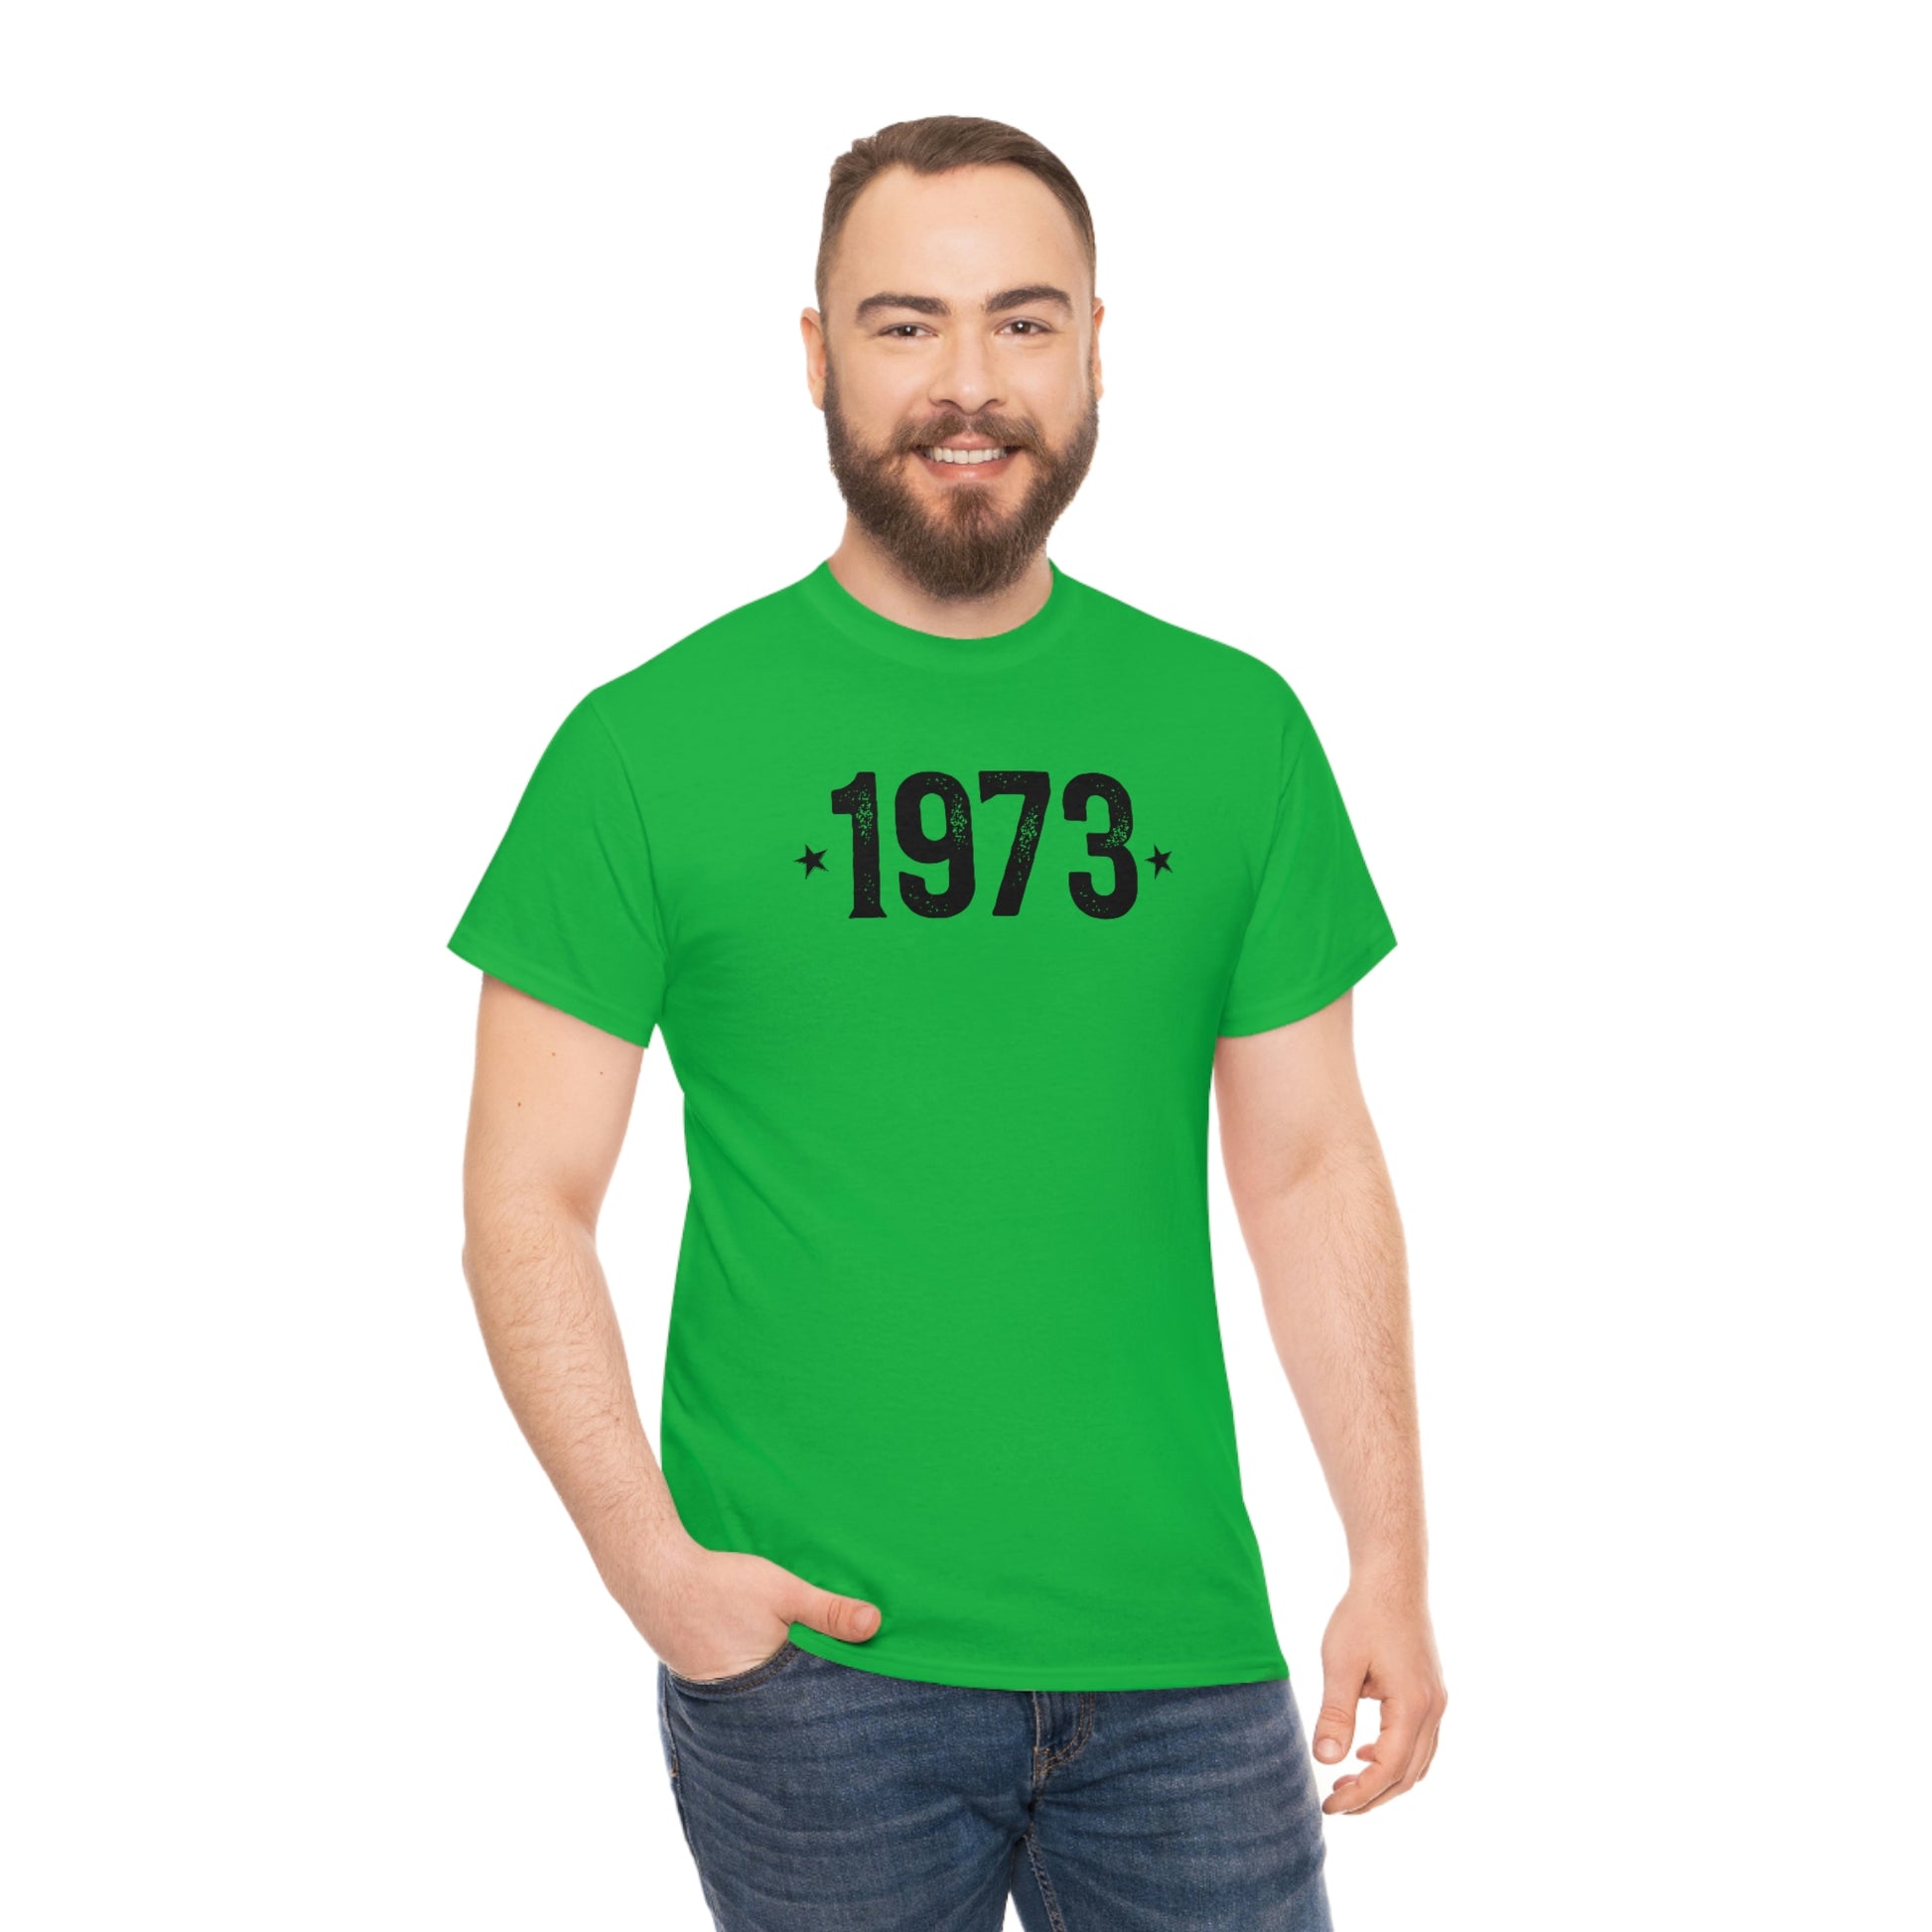 Retro chic "1973 Birthday Year" T-Shirt, 100% cotton, true to size.